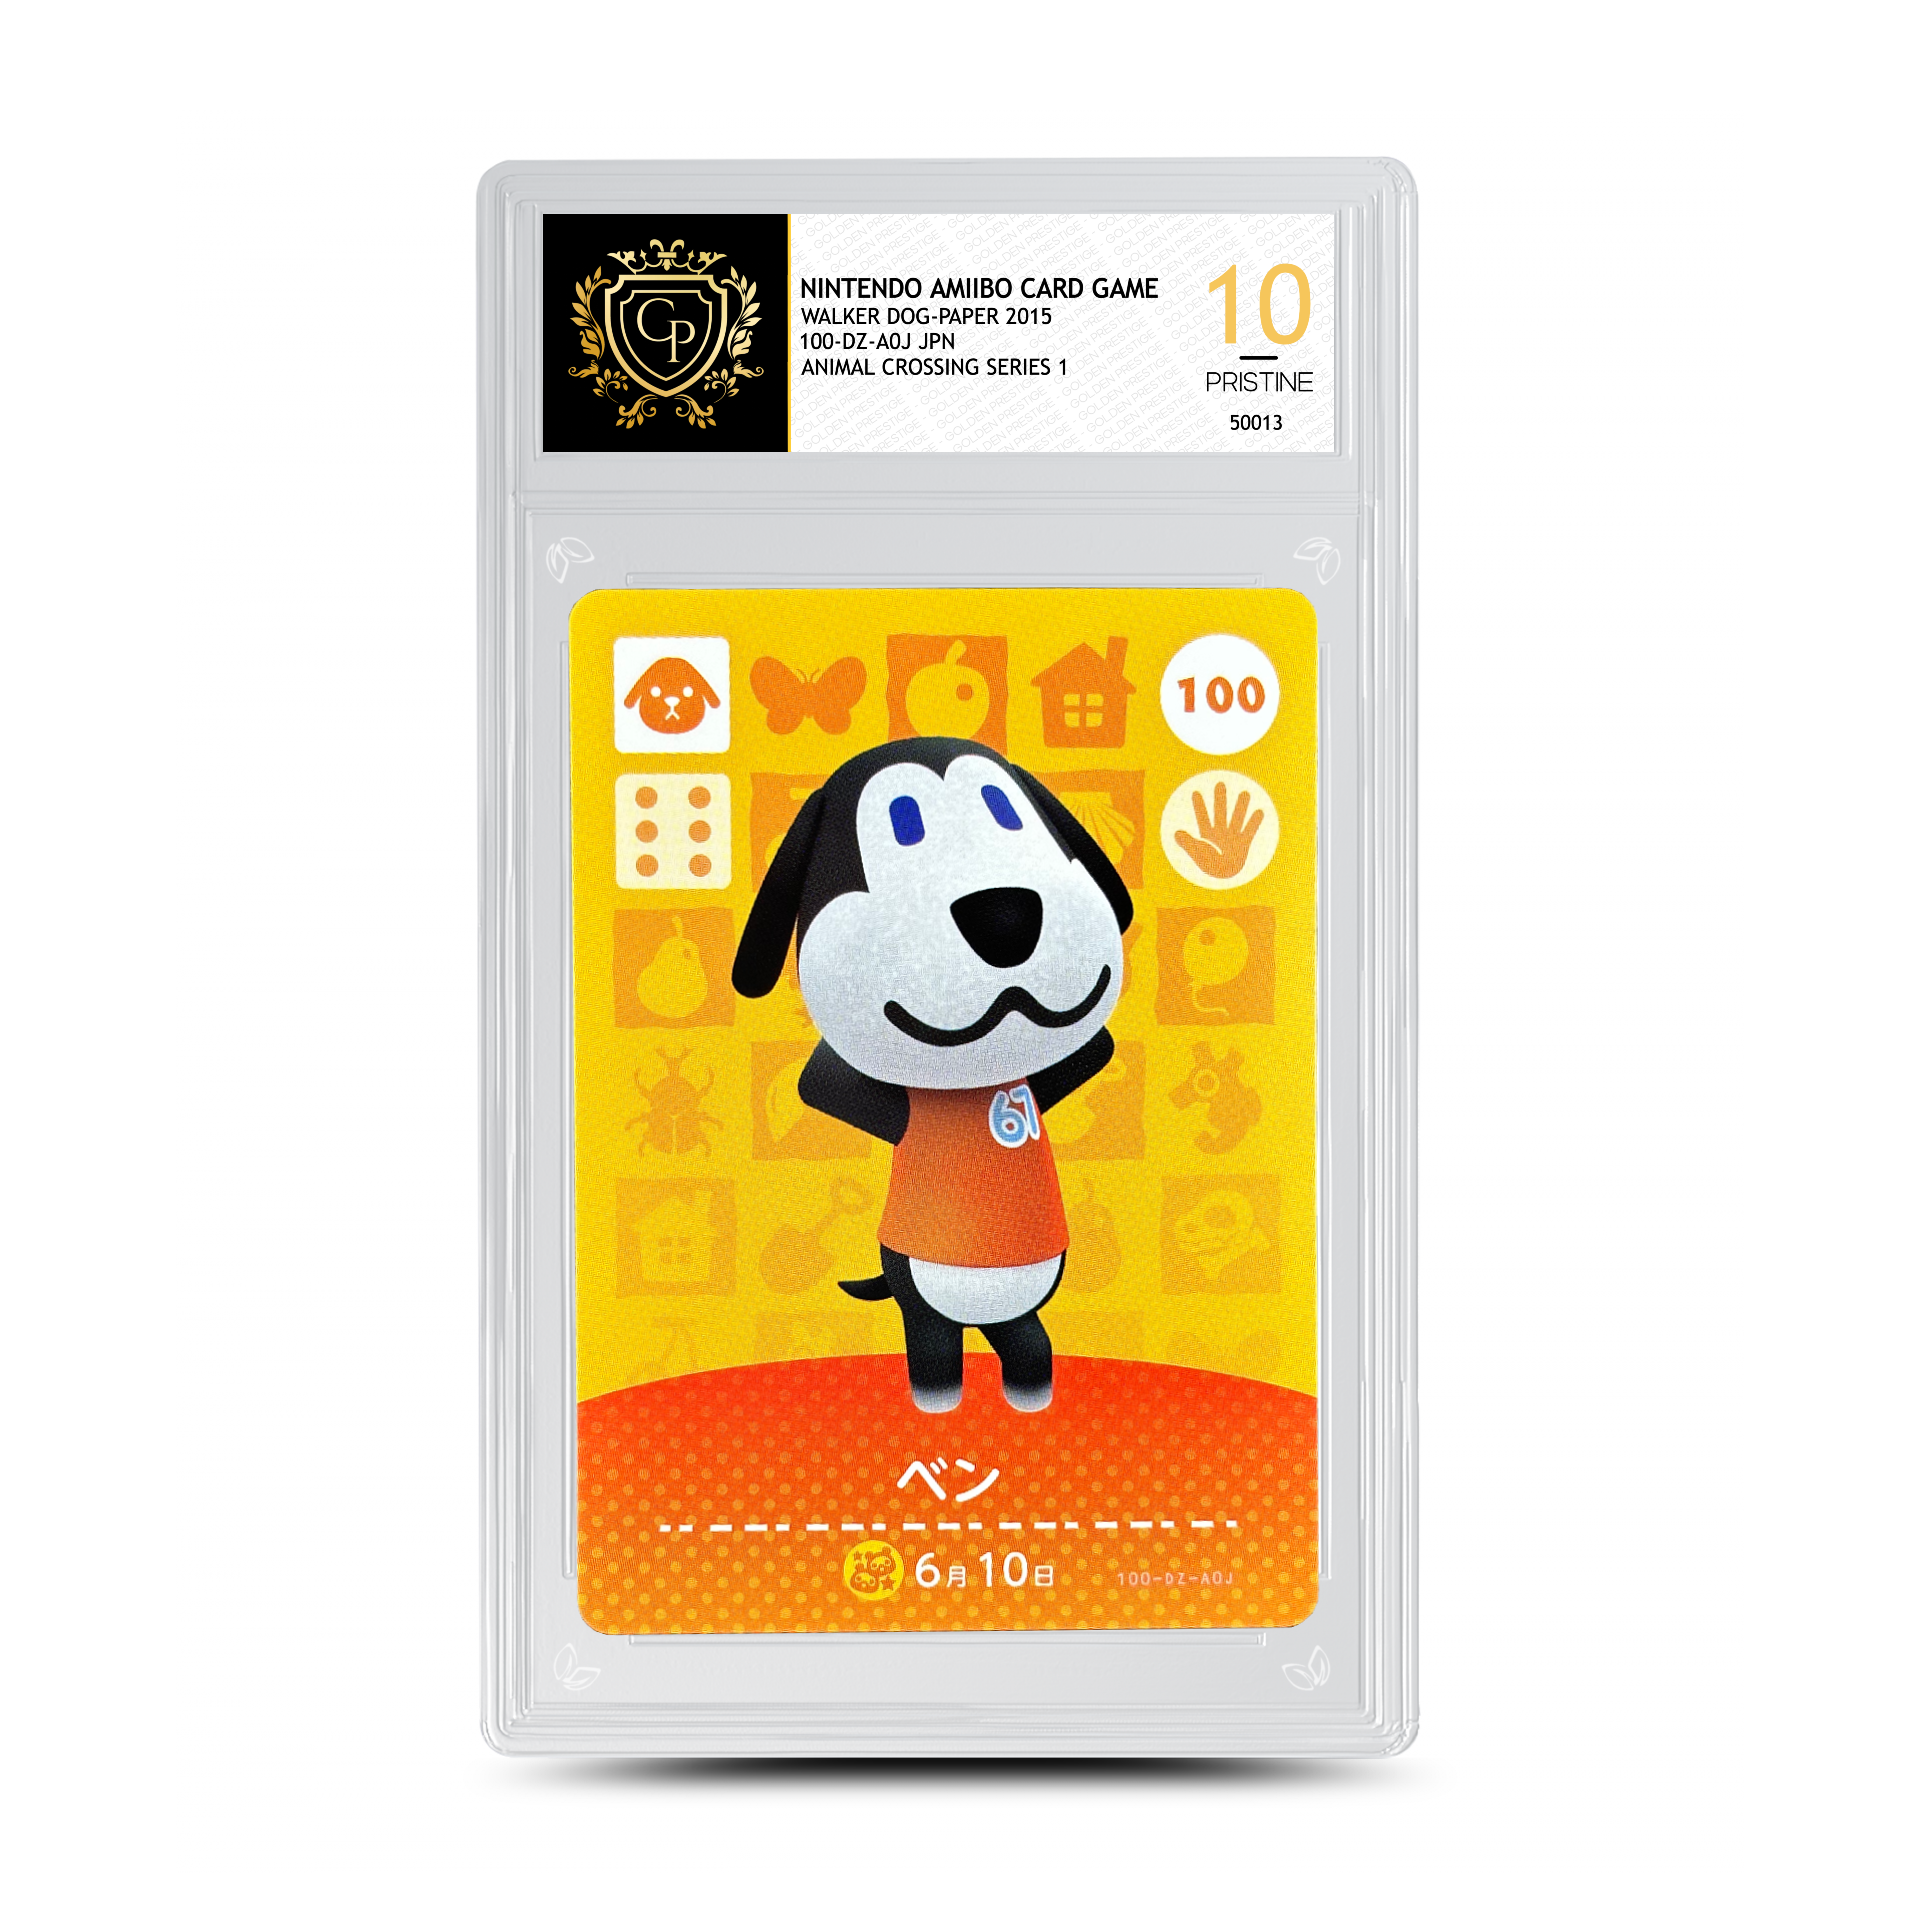 NINTENDO AMIIBO CARD GAME WALKER 2015 JPN 100-DZ-A0J DOG-PAPER ANIMAL CROSSING SERIES 1 - 10 GP